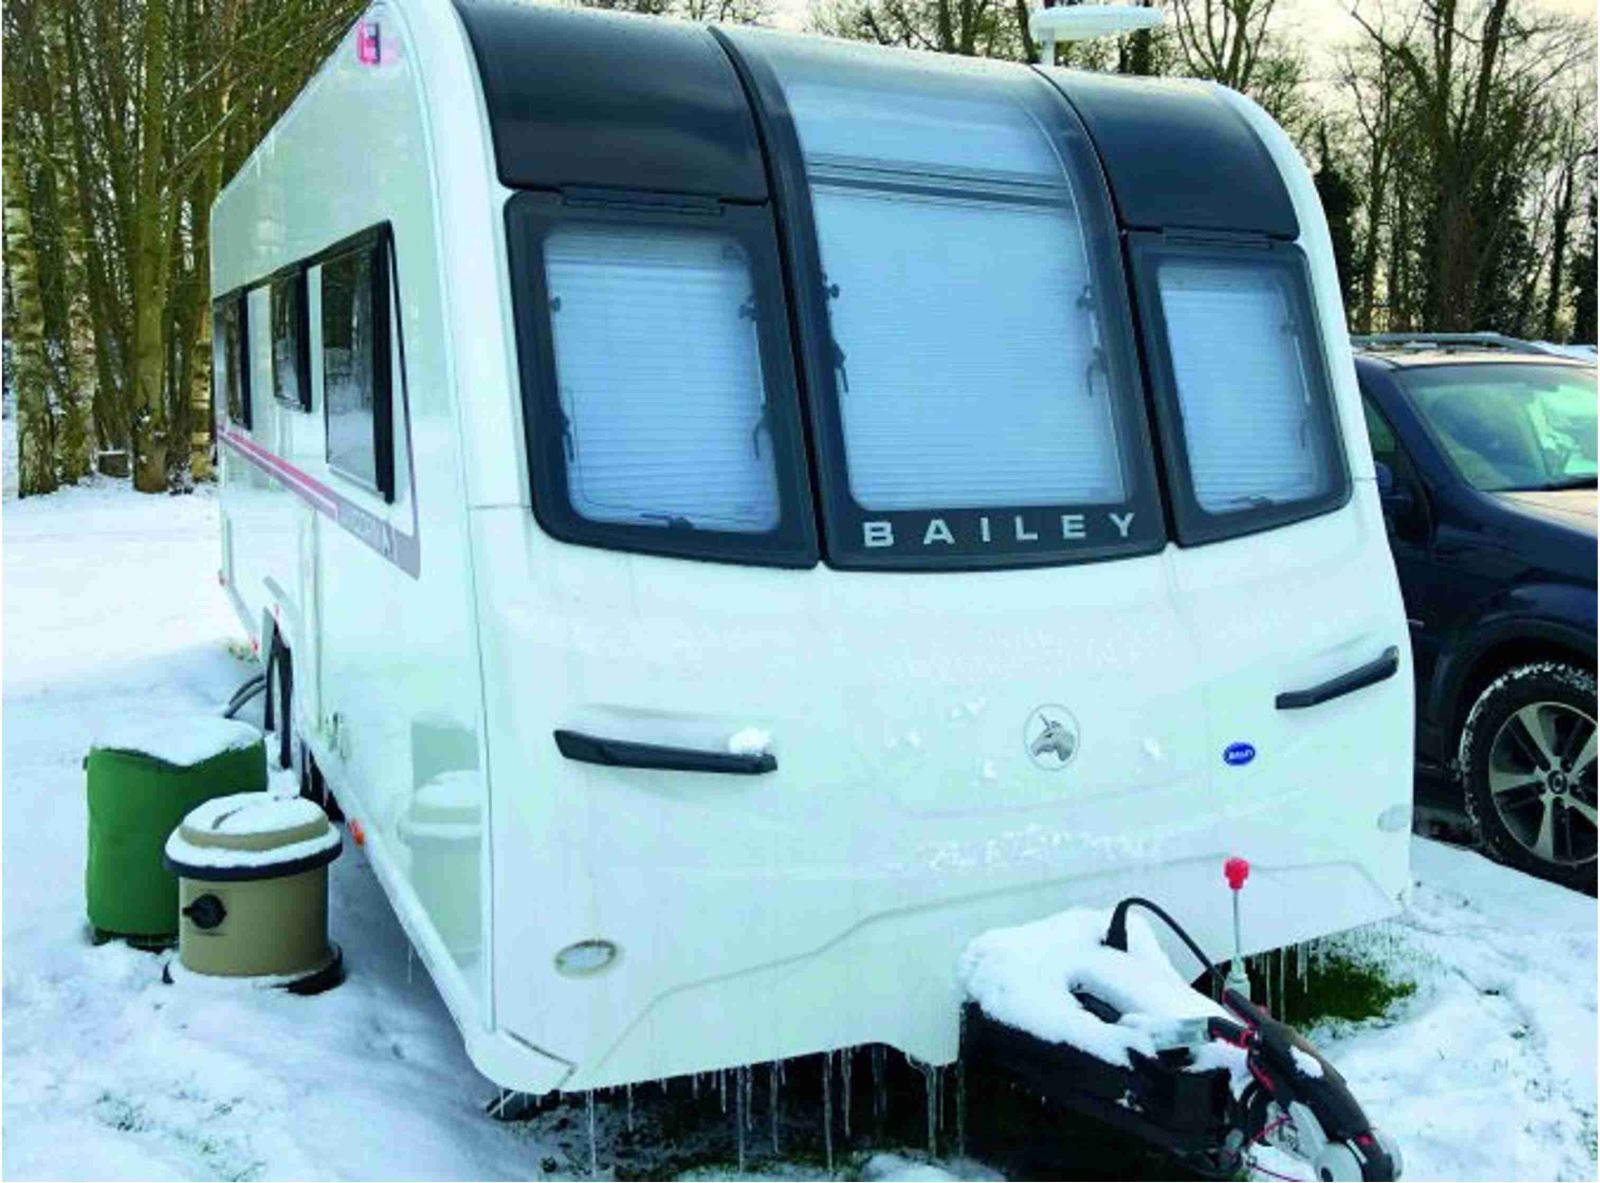 A Bailey caravan in the snow